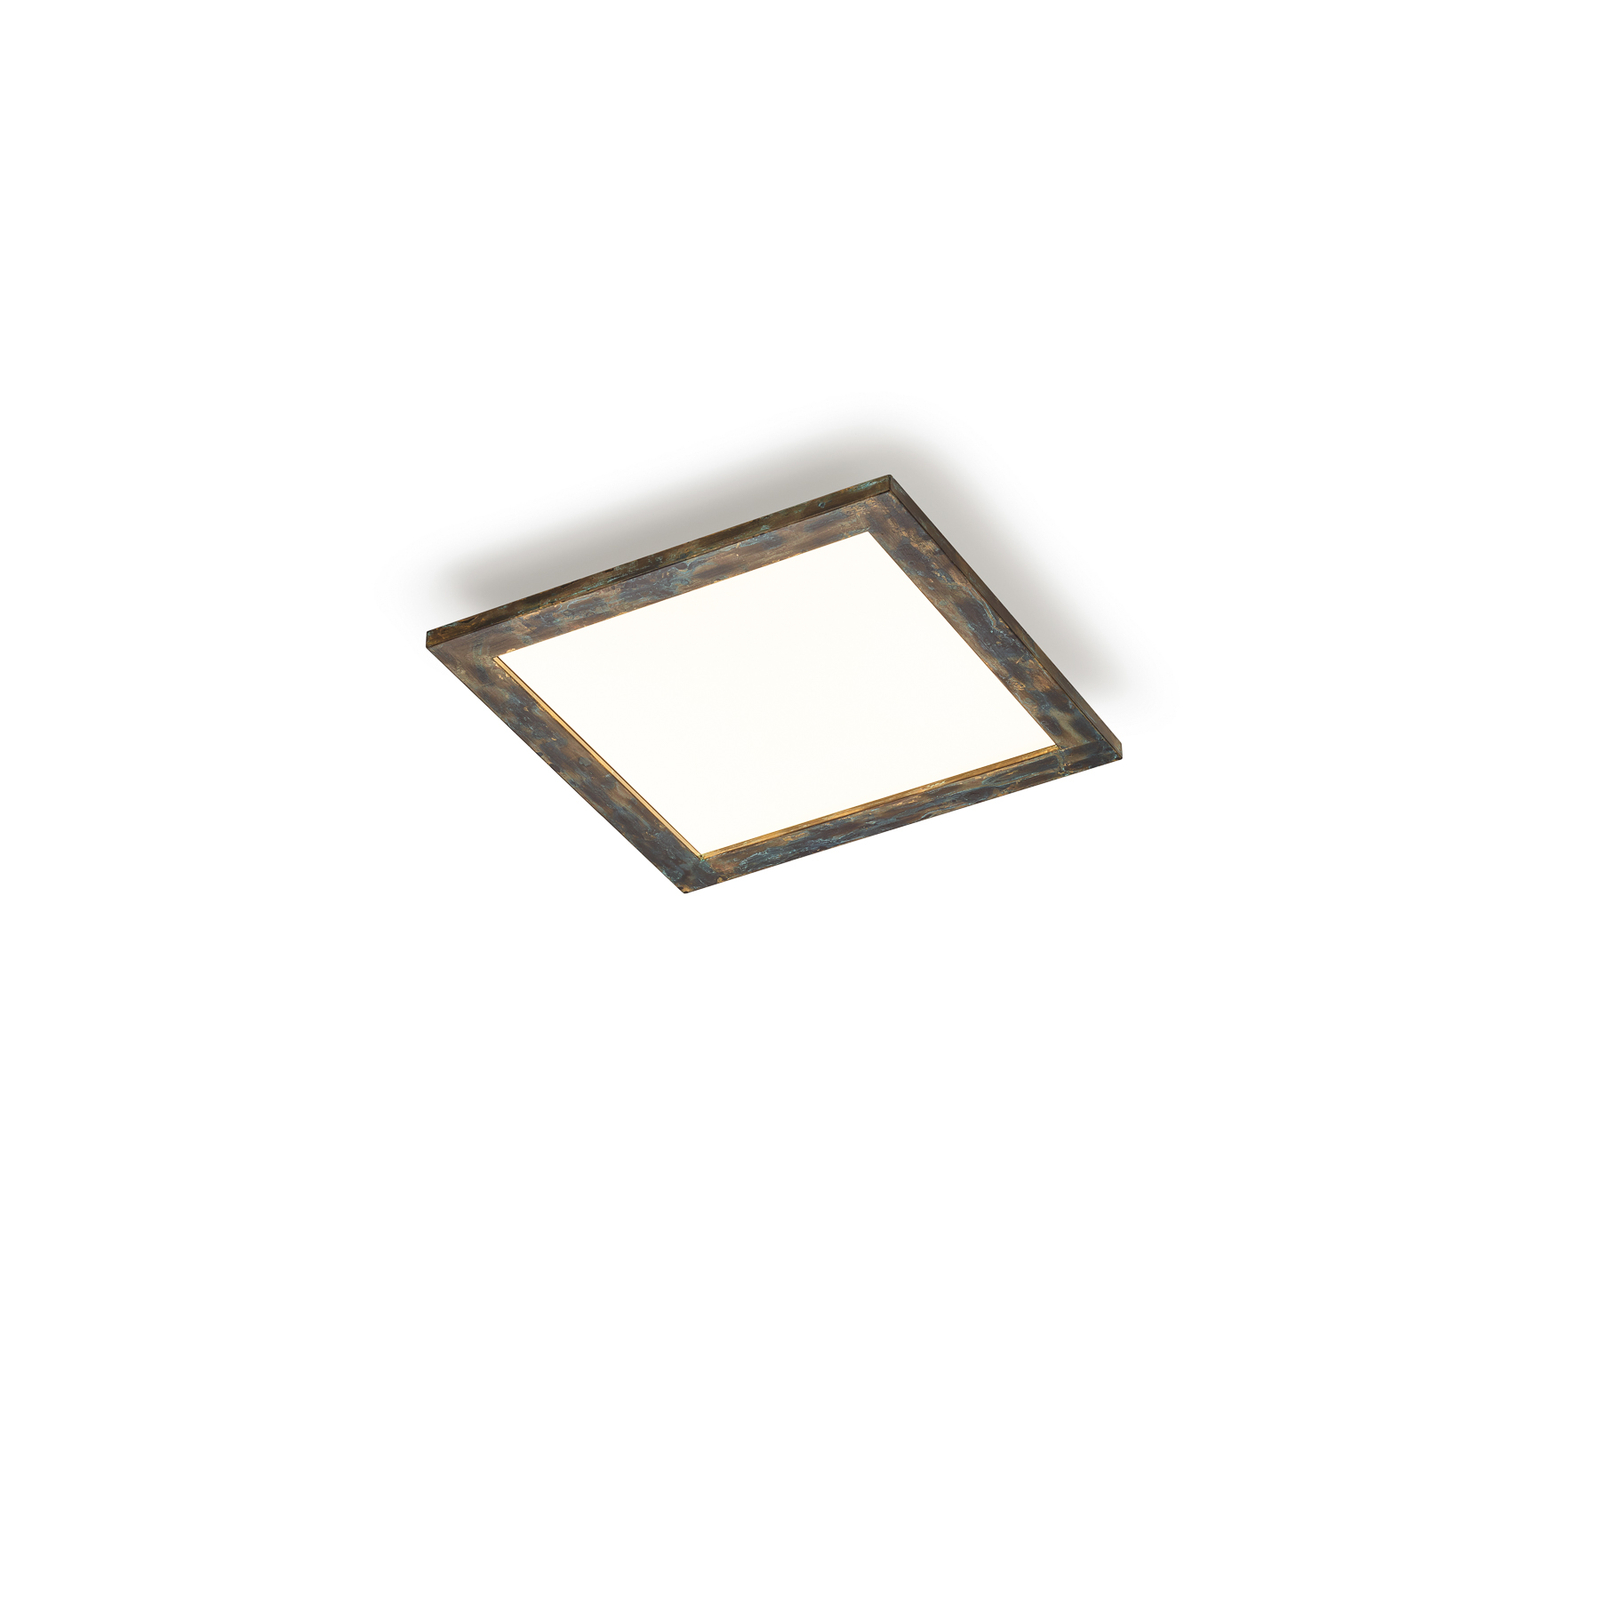 Quitani Aurinor LED panel, arany színű patinás, 45 cm